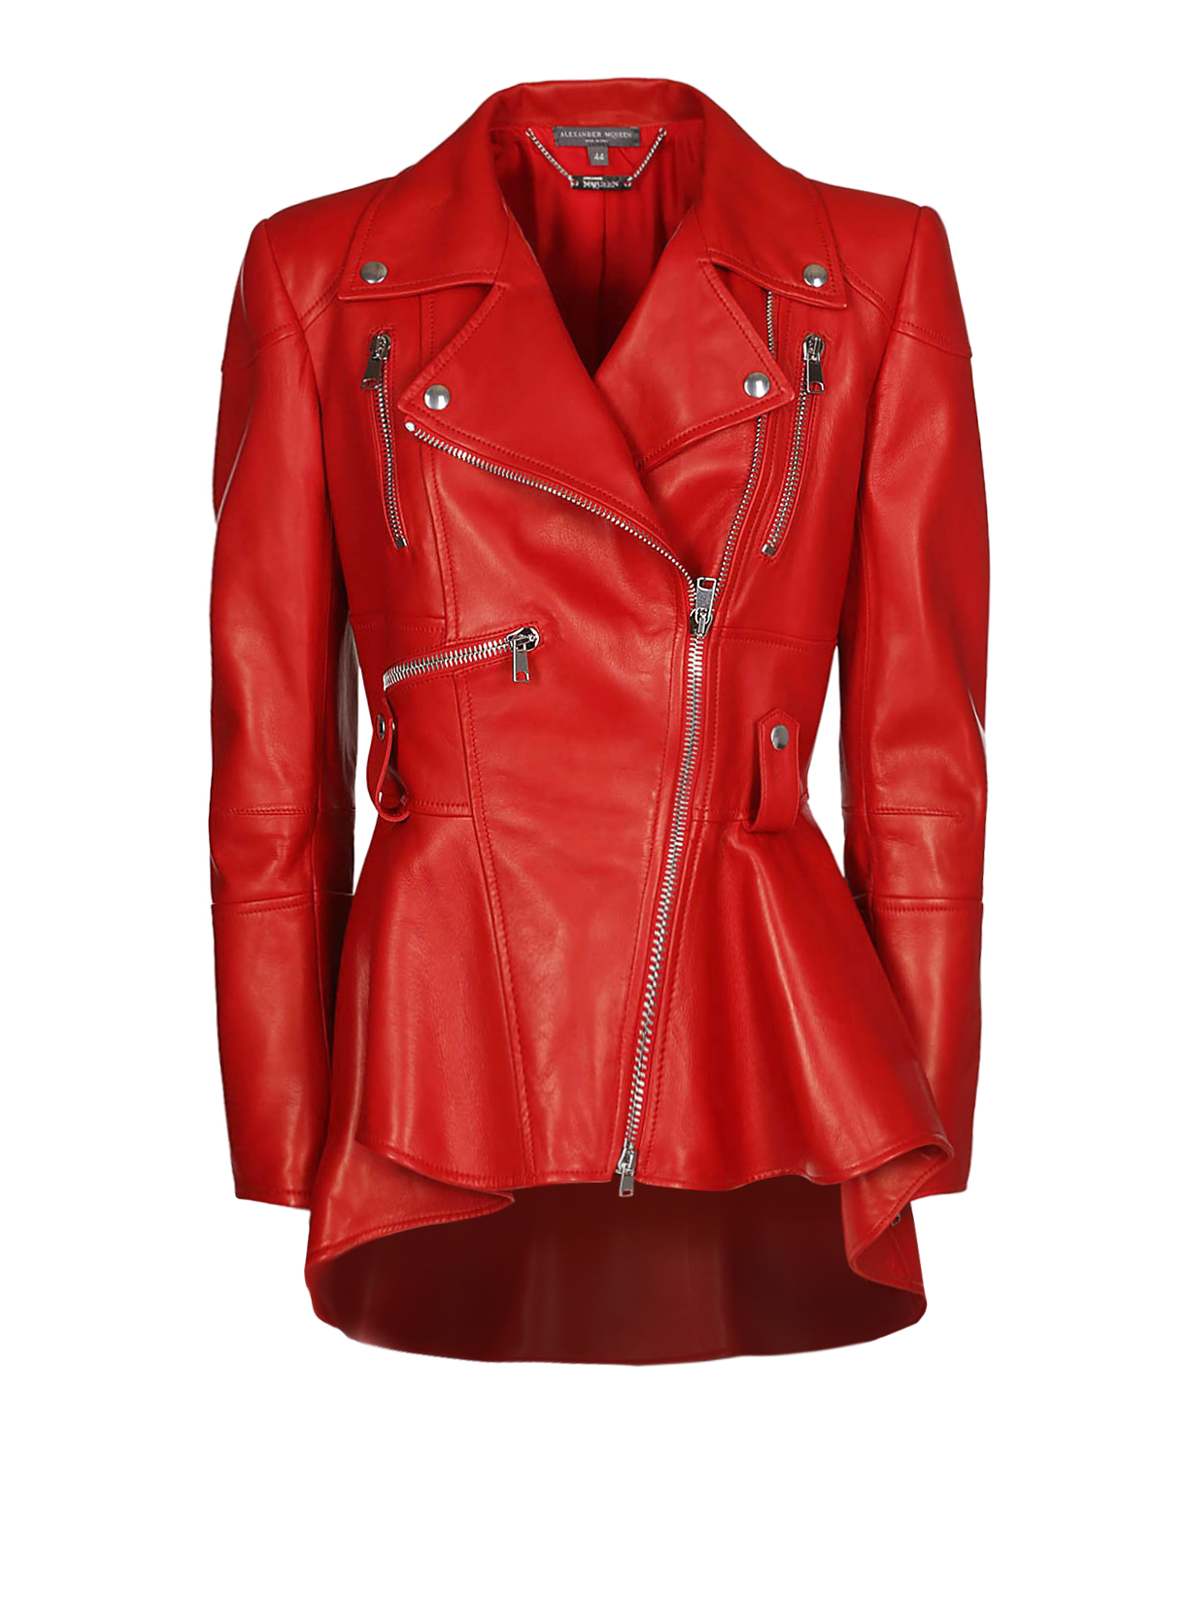 Leather jacket Alexander Mcqueen - Red leather peplum jacket ...